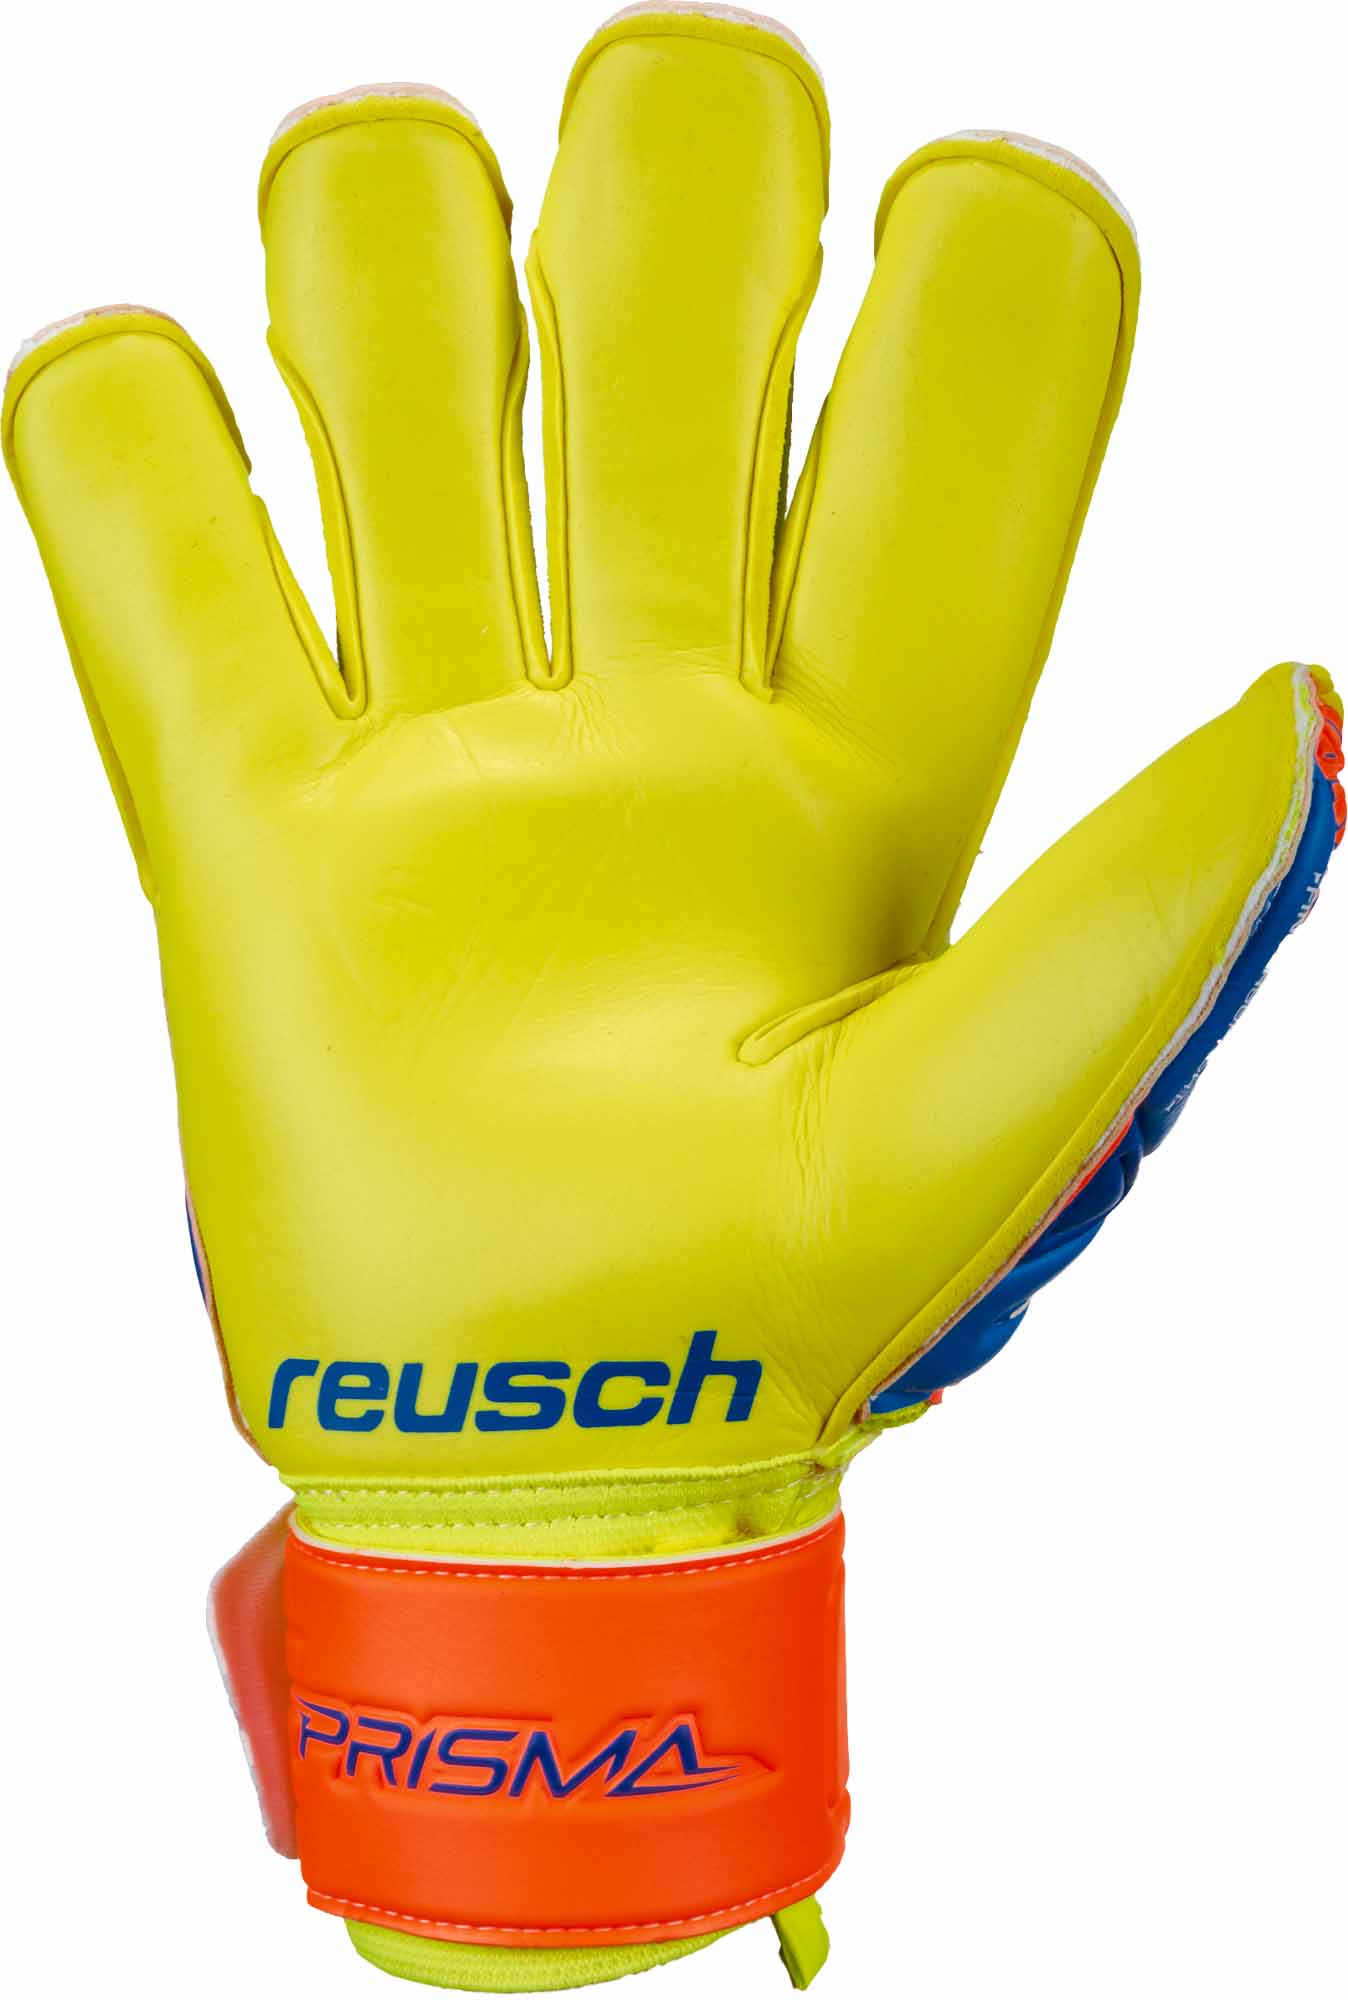 Reusch Prisma Prime S1 Evolution Finger Support Torwarthandschuhe 